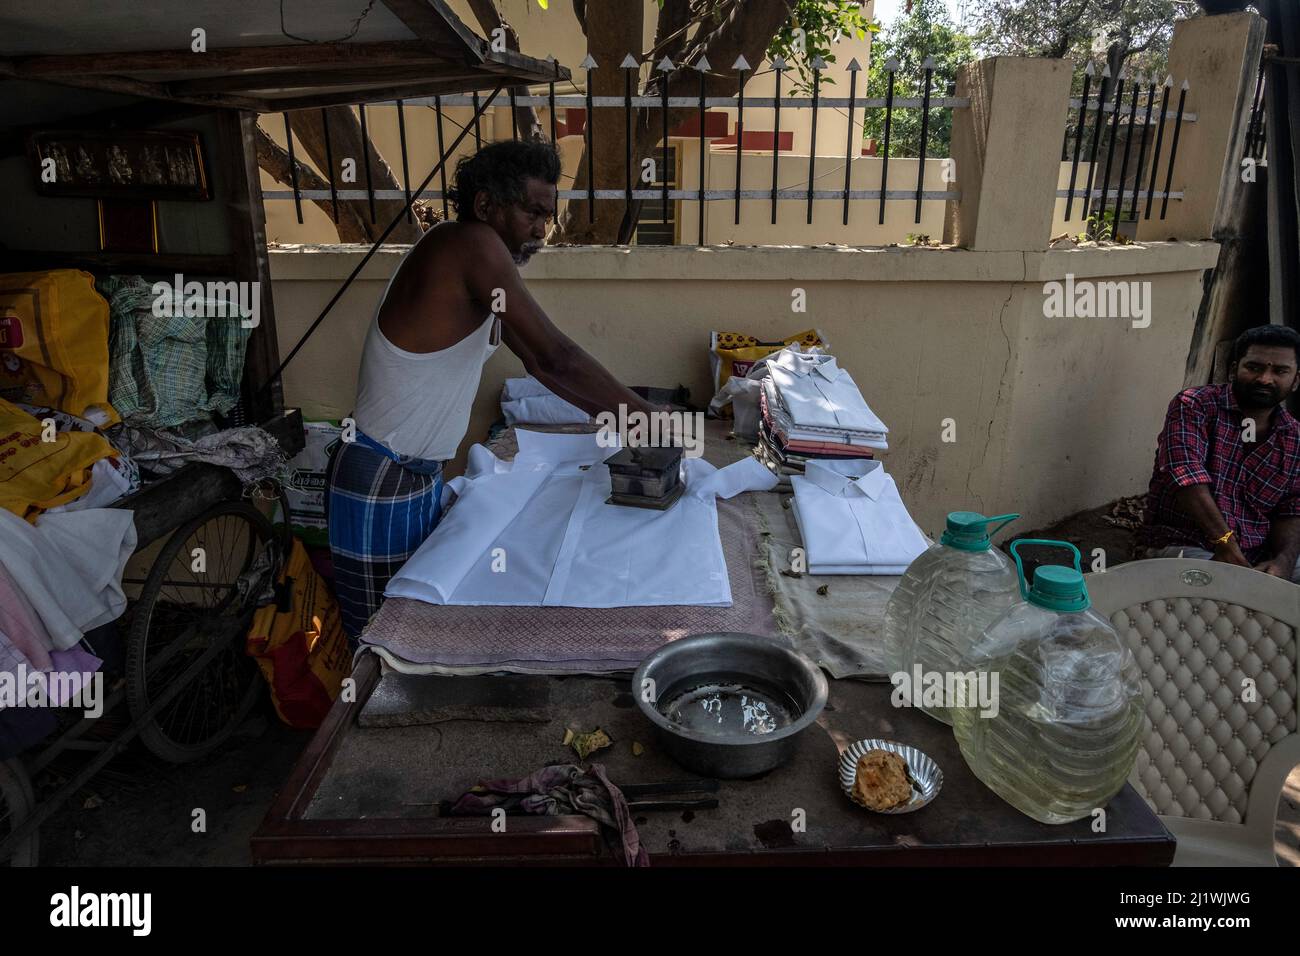 Presser pressing garments with a coal iron at the Marketplace at Tiruvannamalai, Tamil Nadu, India Stock Photo